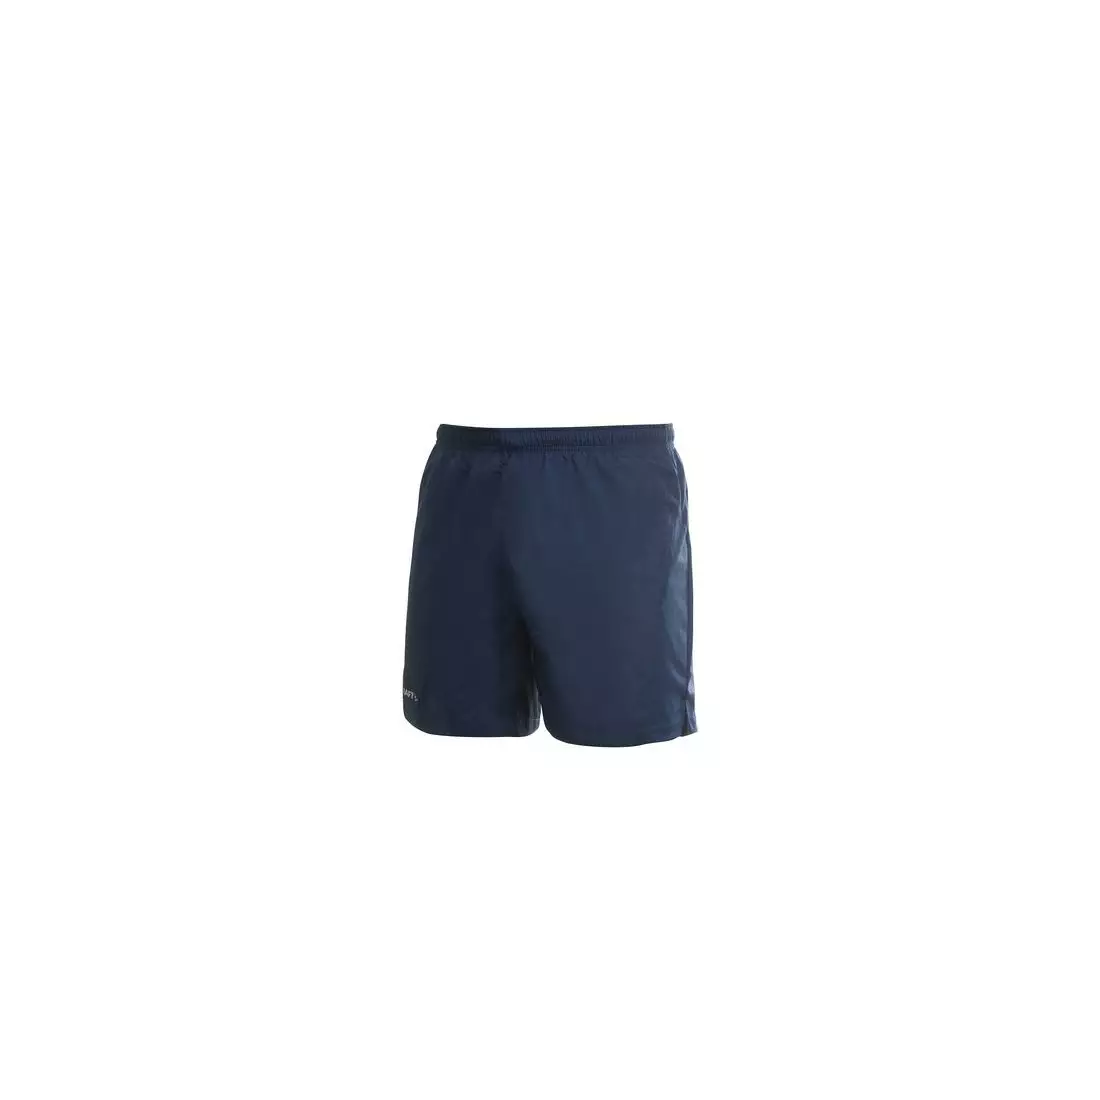 CRAFT ACTIVE - men's running shorts 194145-1395